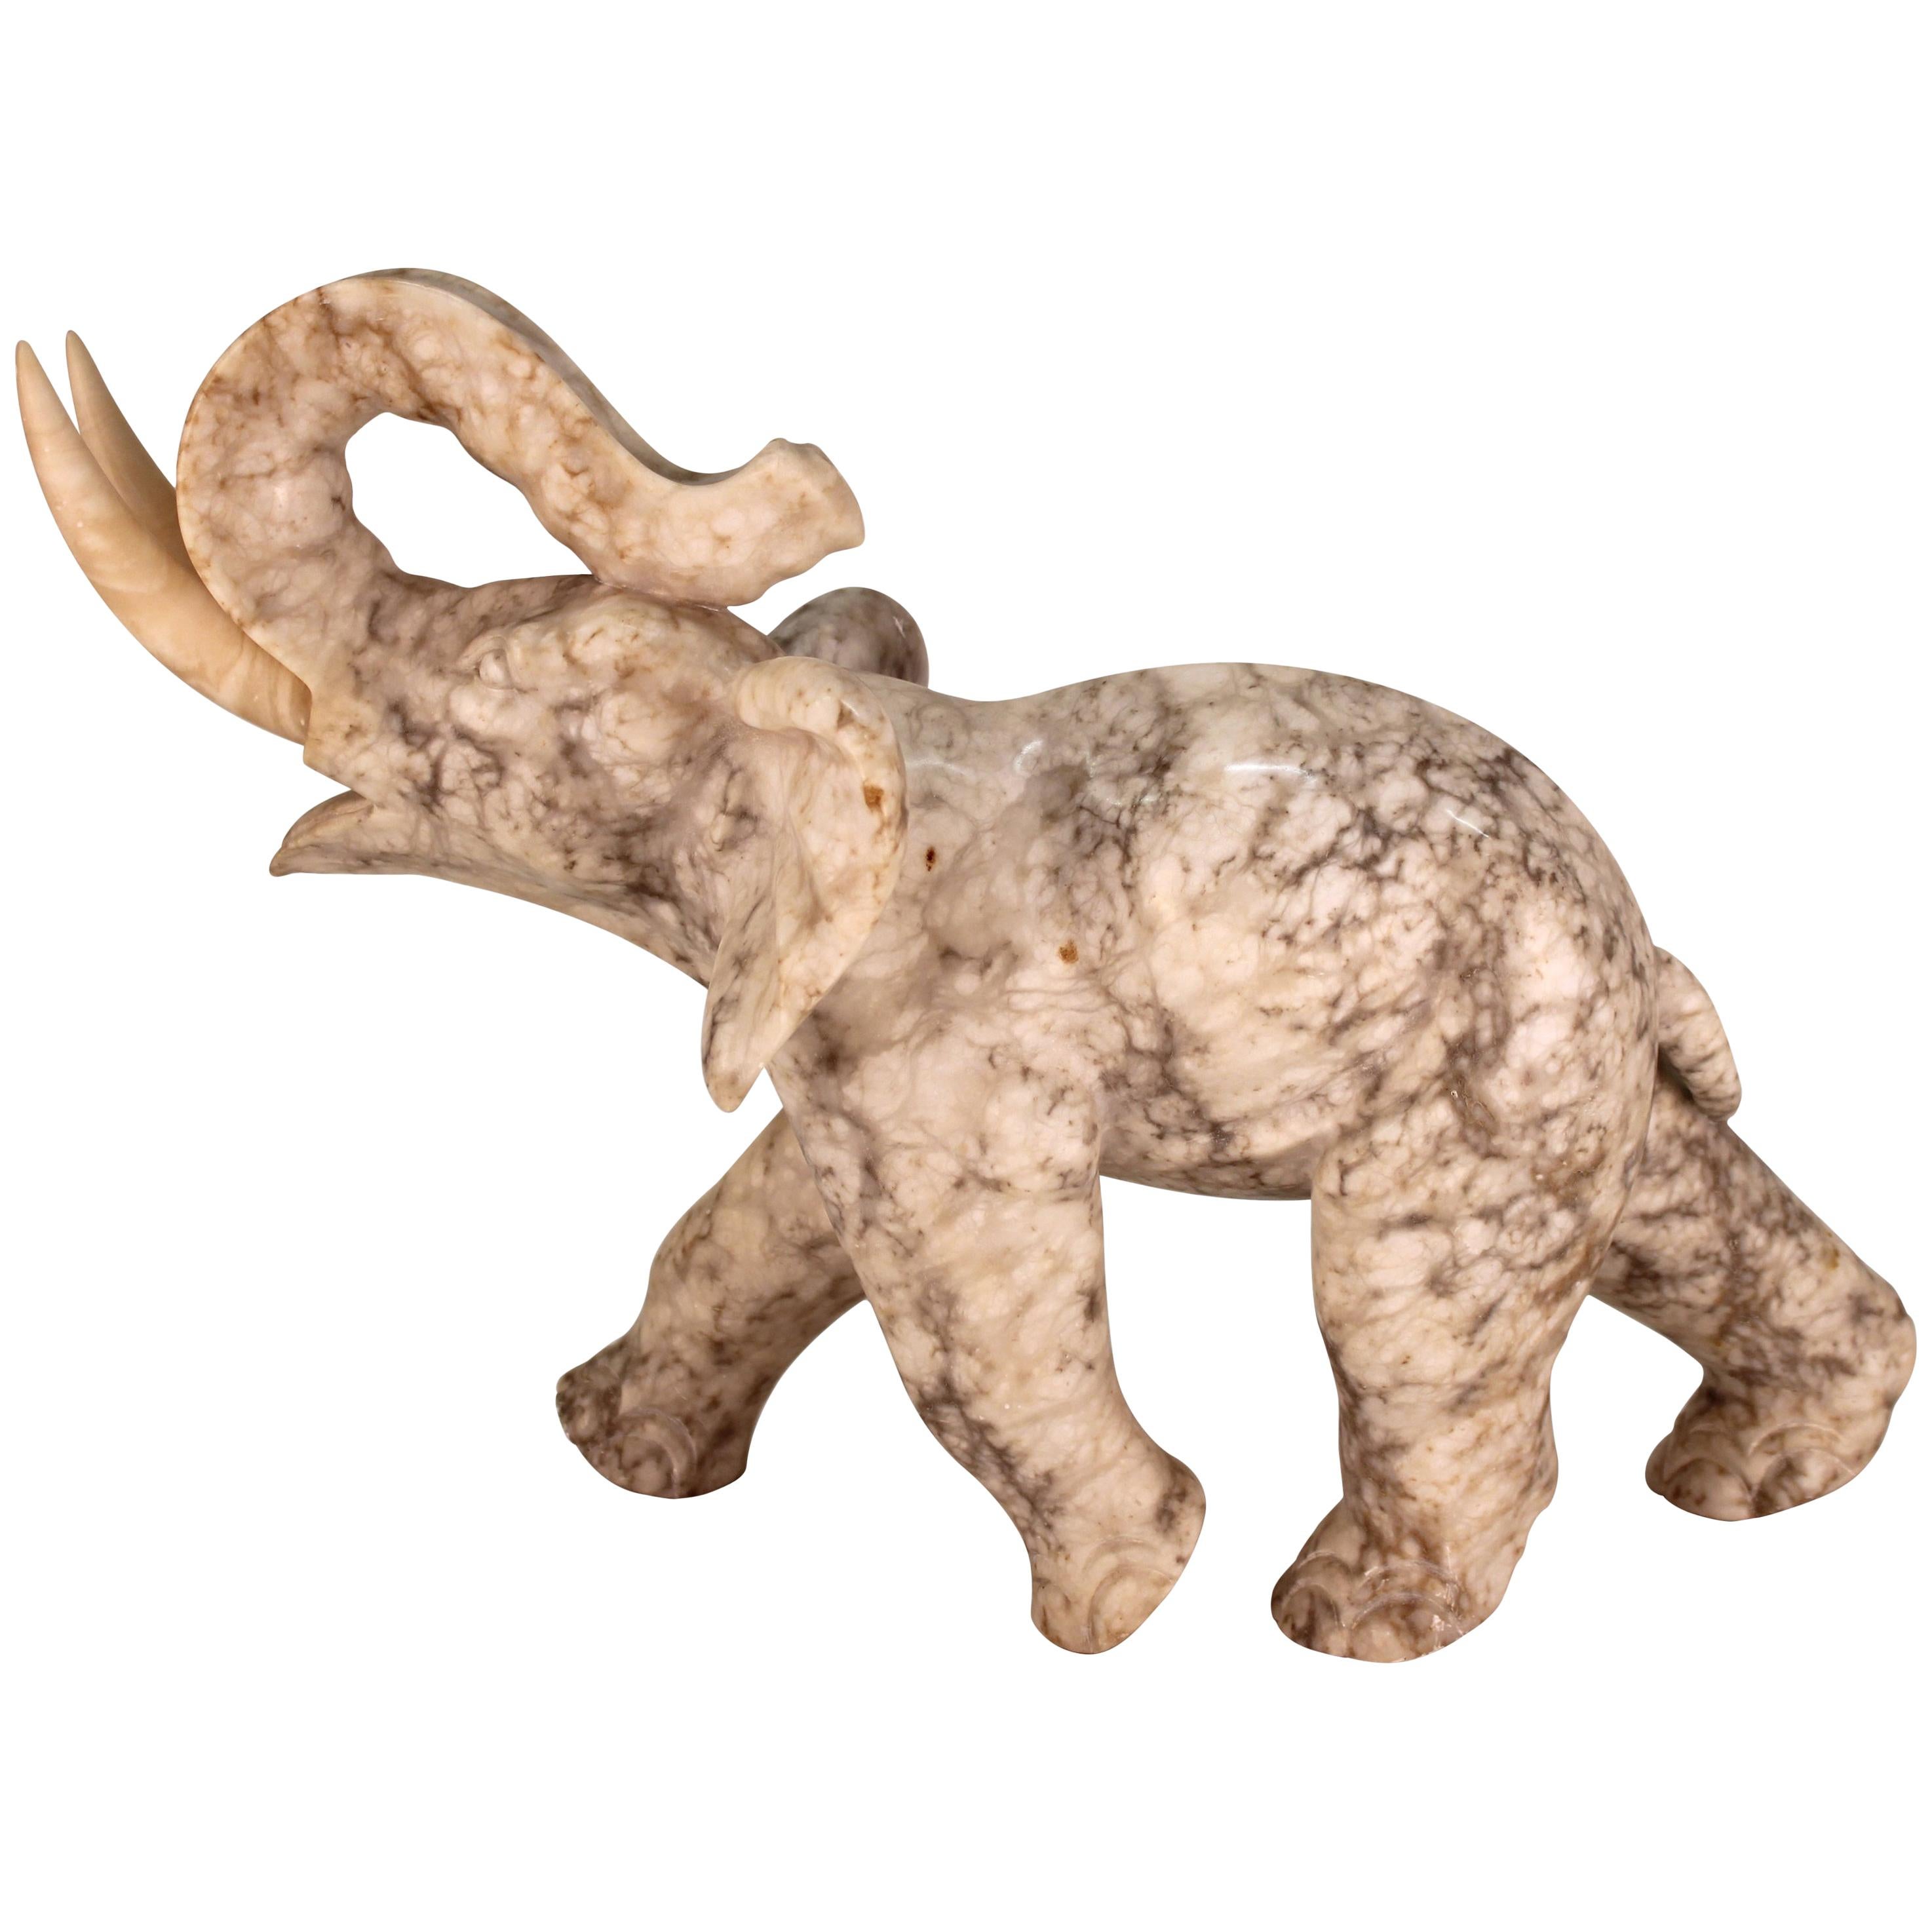 Midcentury Marble Elephant Figure with Alabaster Tusks